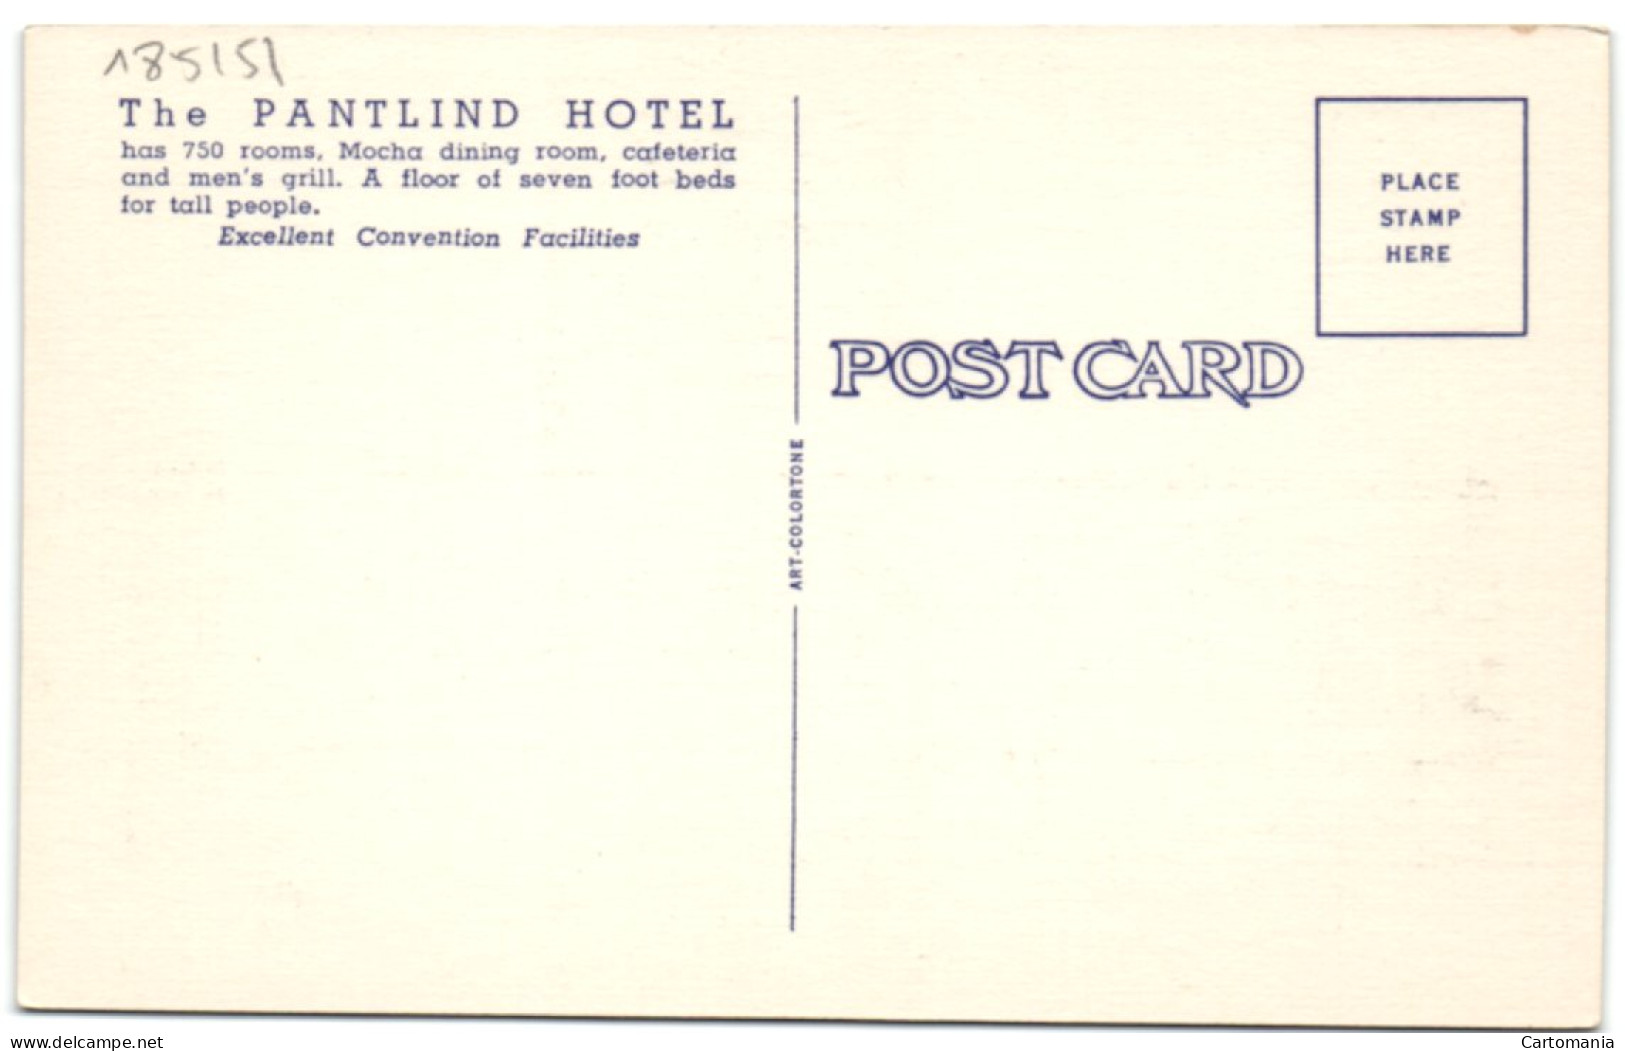 Pantlind Hotel - Grand Rapids - Michigan - Grand Rapids